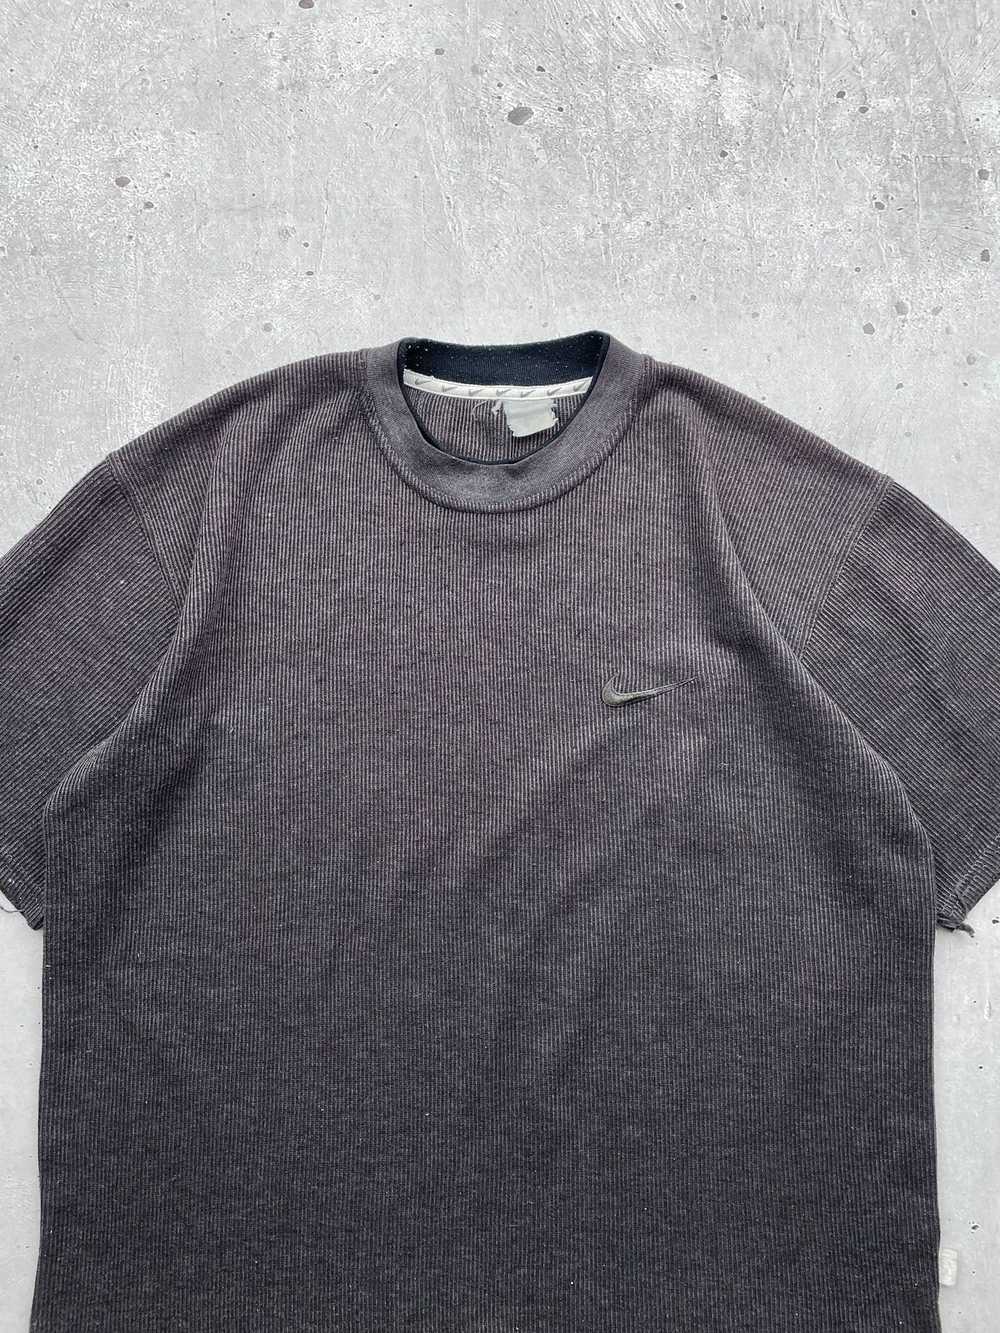 Avant Garde × Nike × Vintage Nike Vintage T-Shirt - image 2